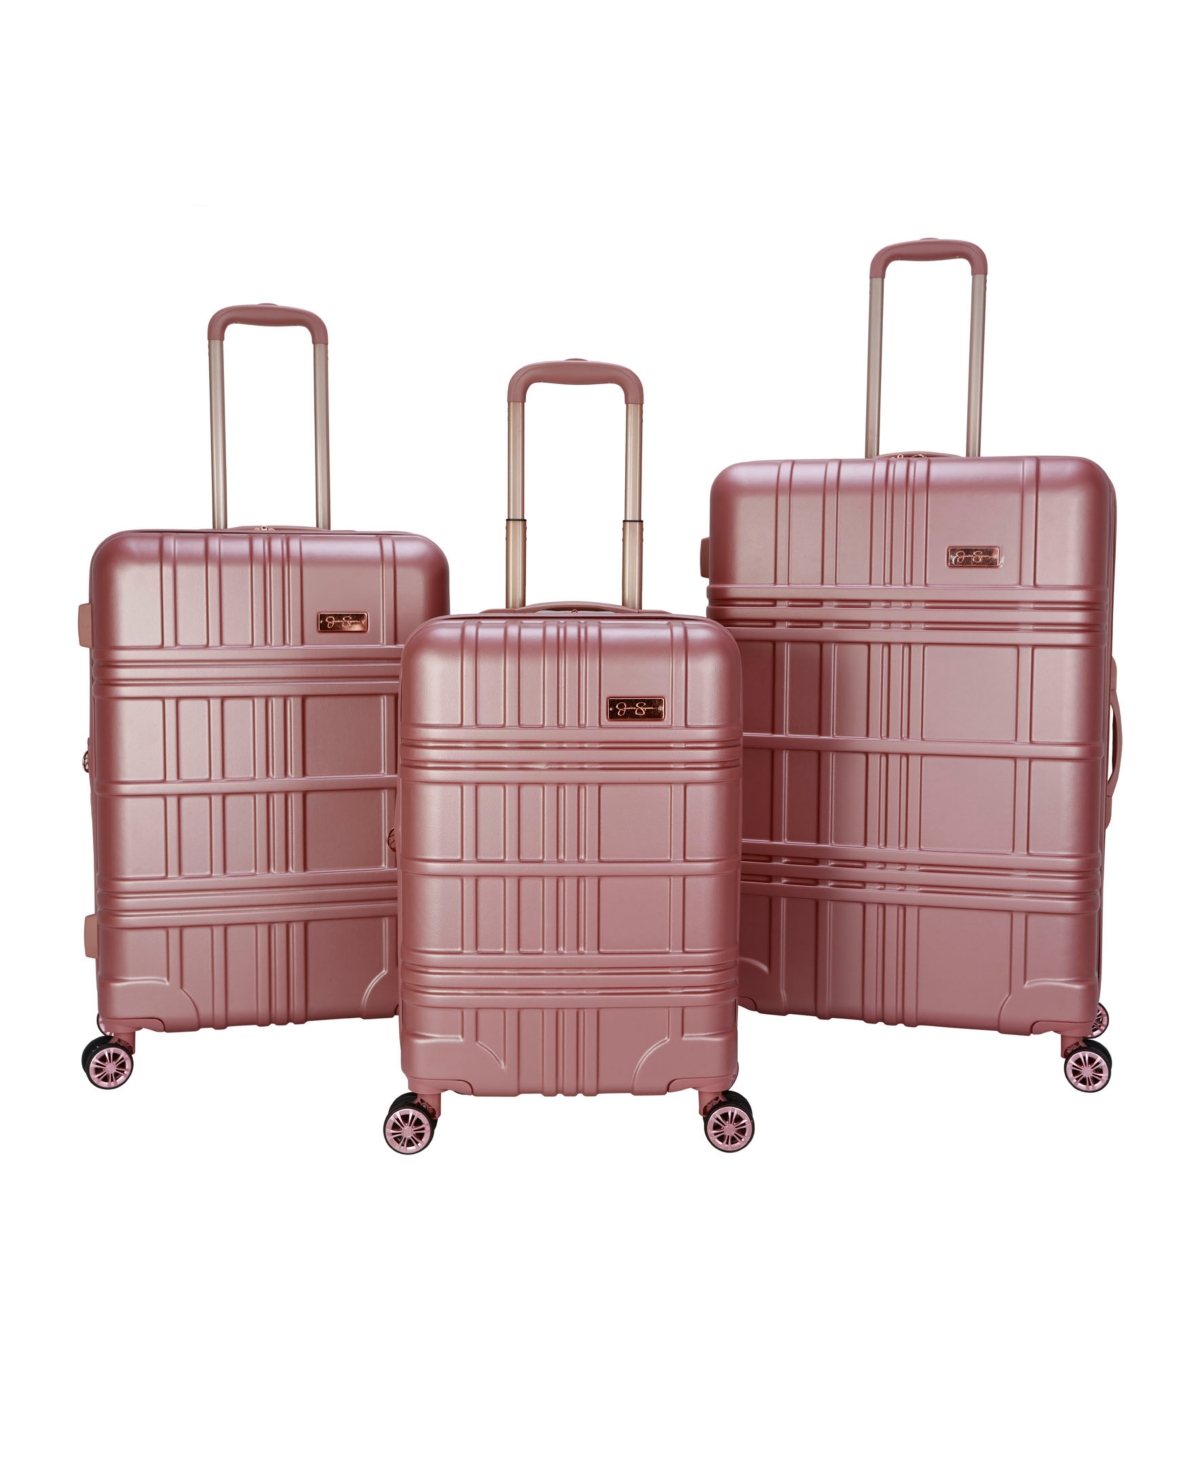 Jessica Simpson Jewel Plaid 3 Piece Hardside Luggage Set In Rose Gold